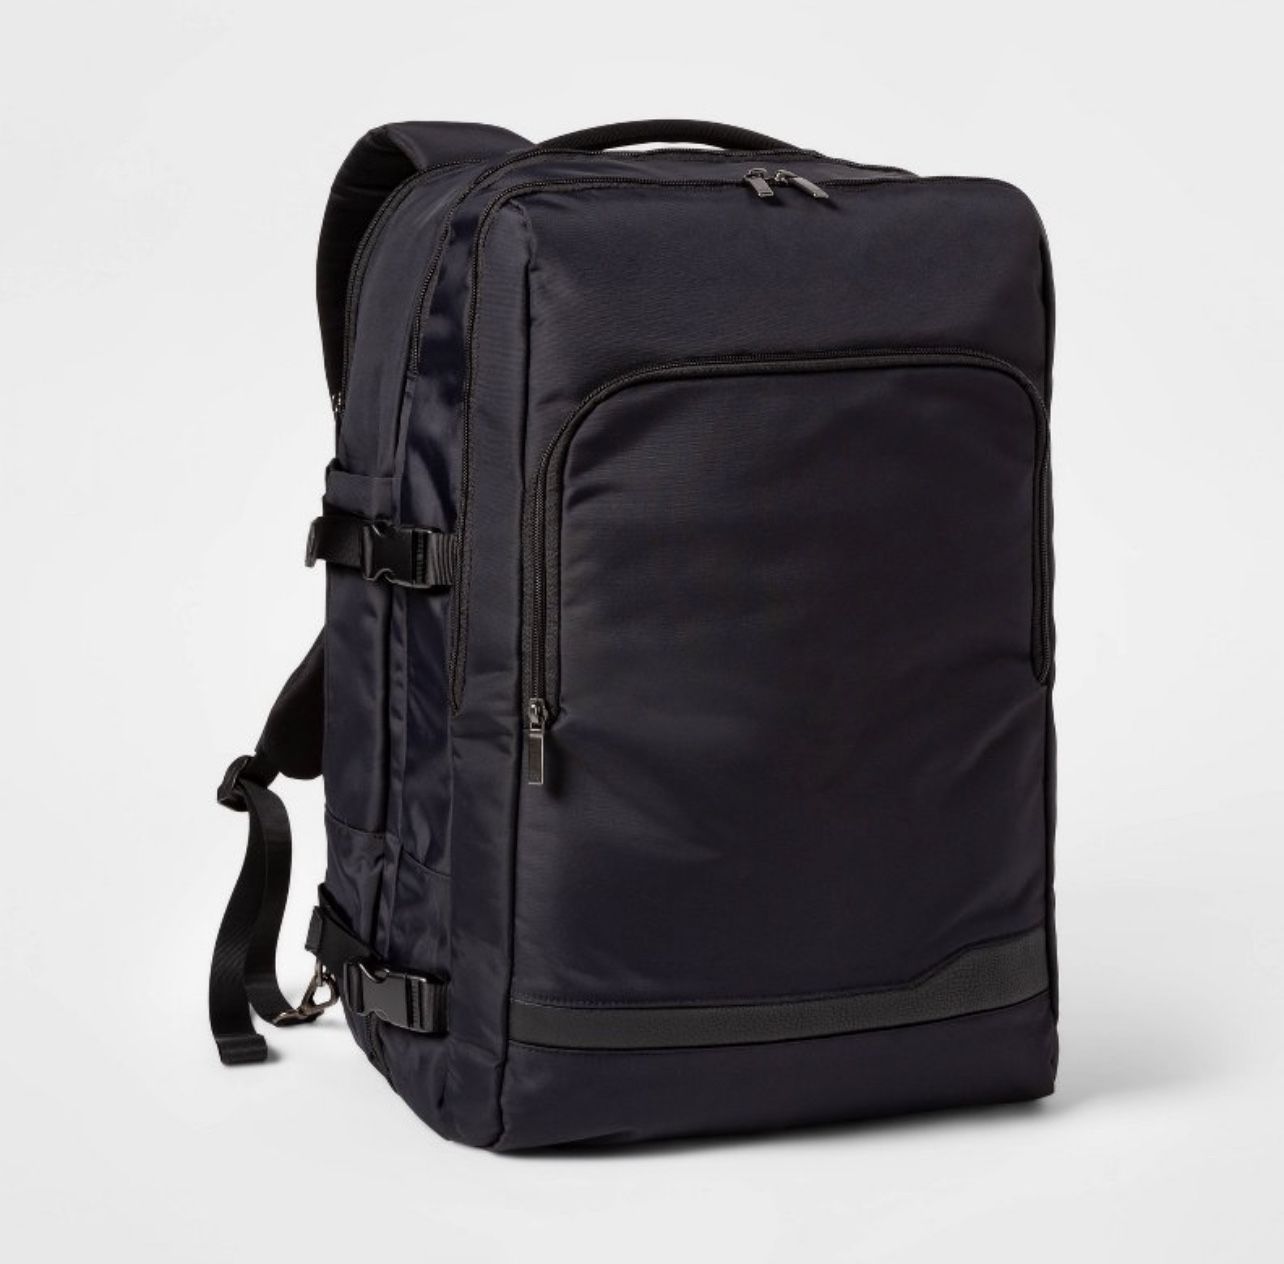 Suitcase/ Traveler 21" Backpack Black - Open Story